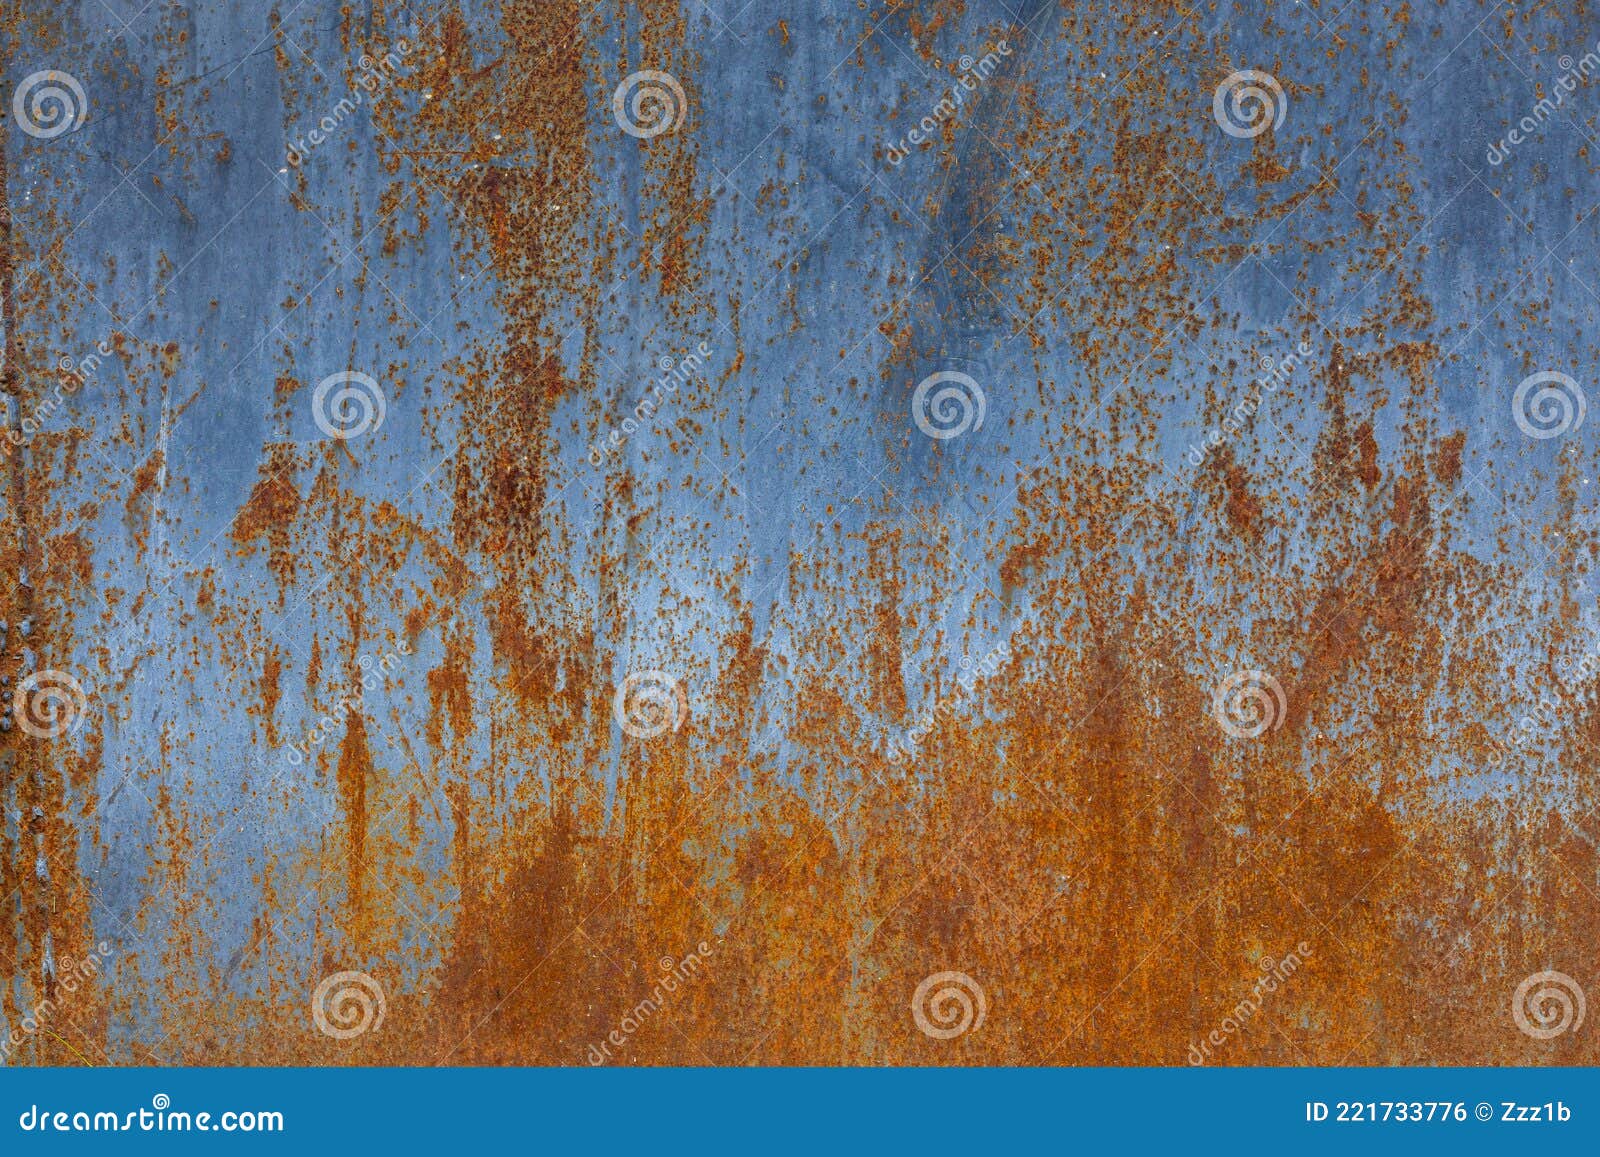 Can sheet metal rust фото 6